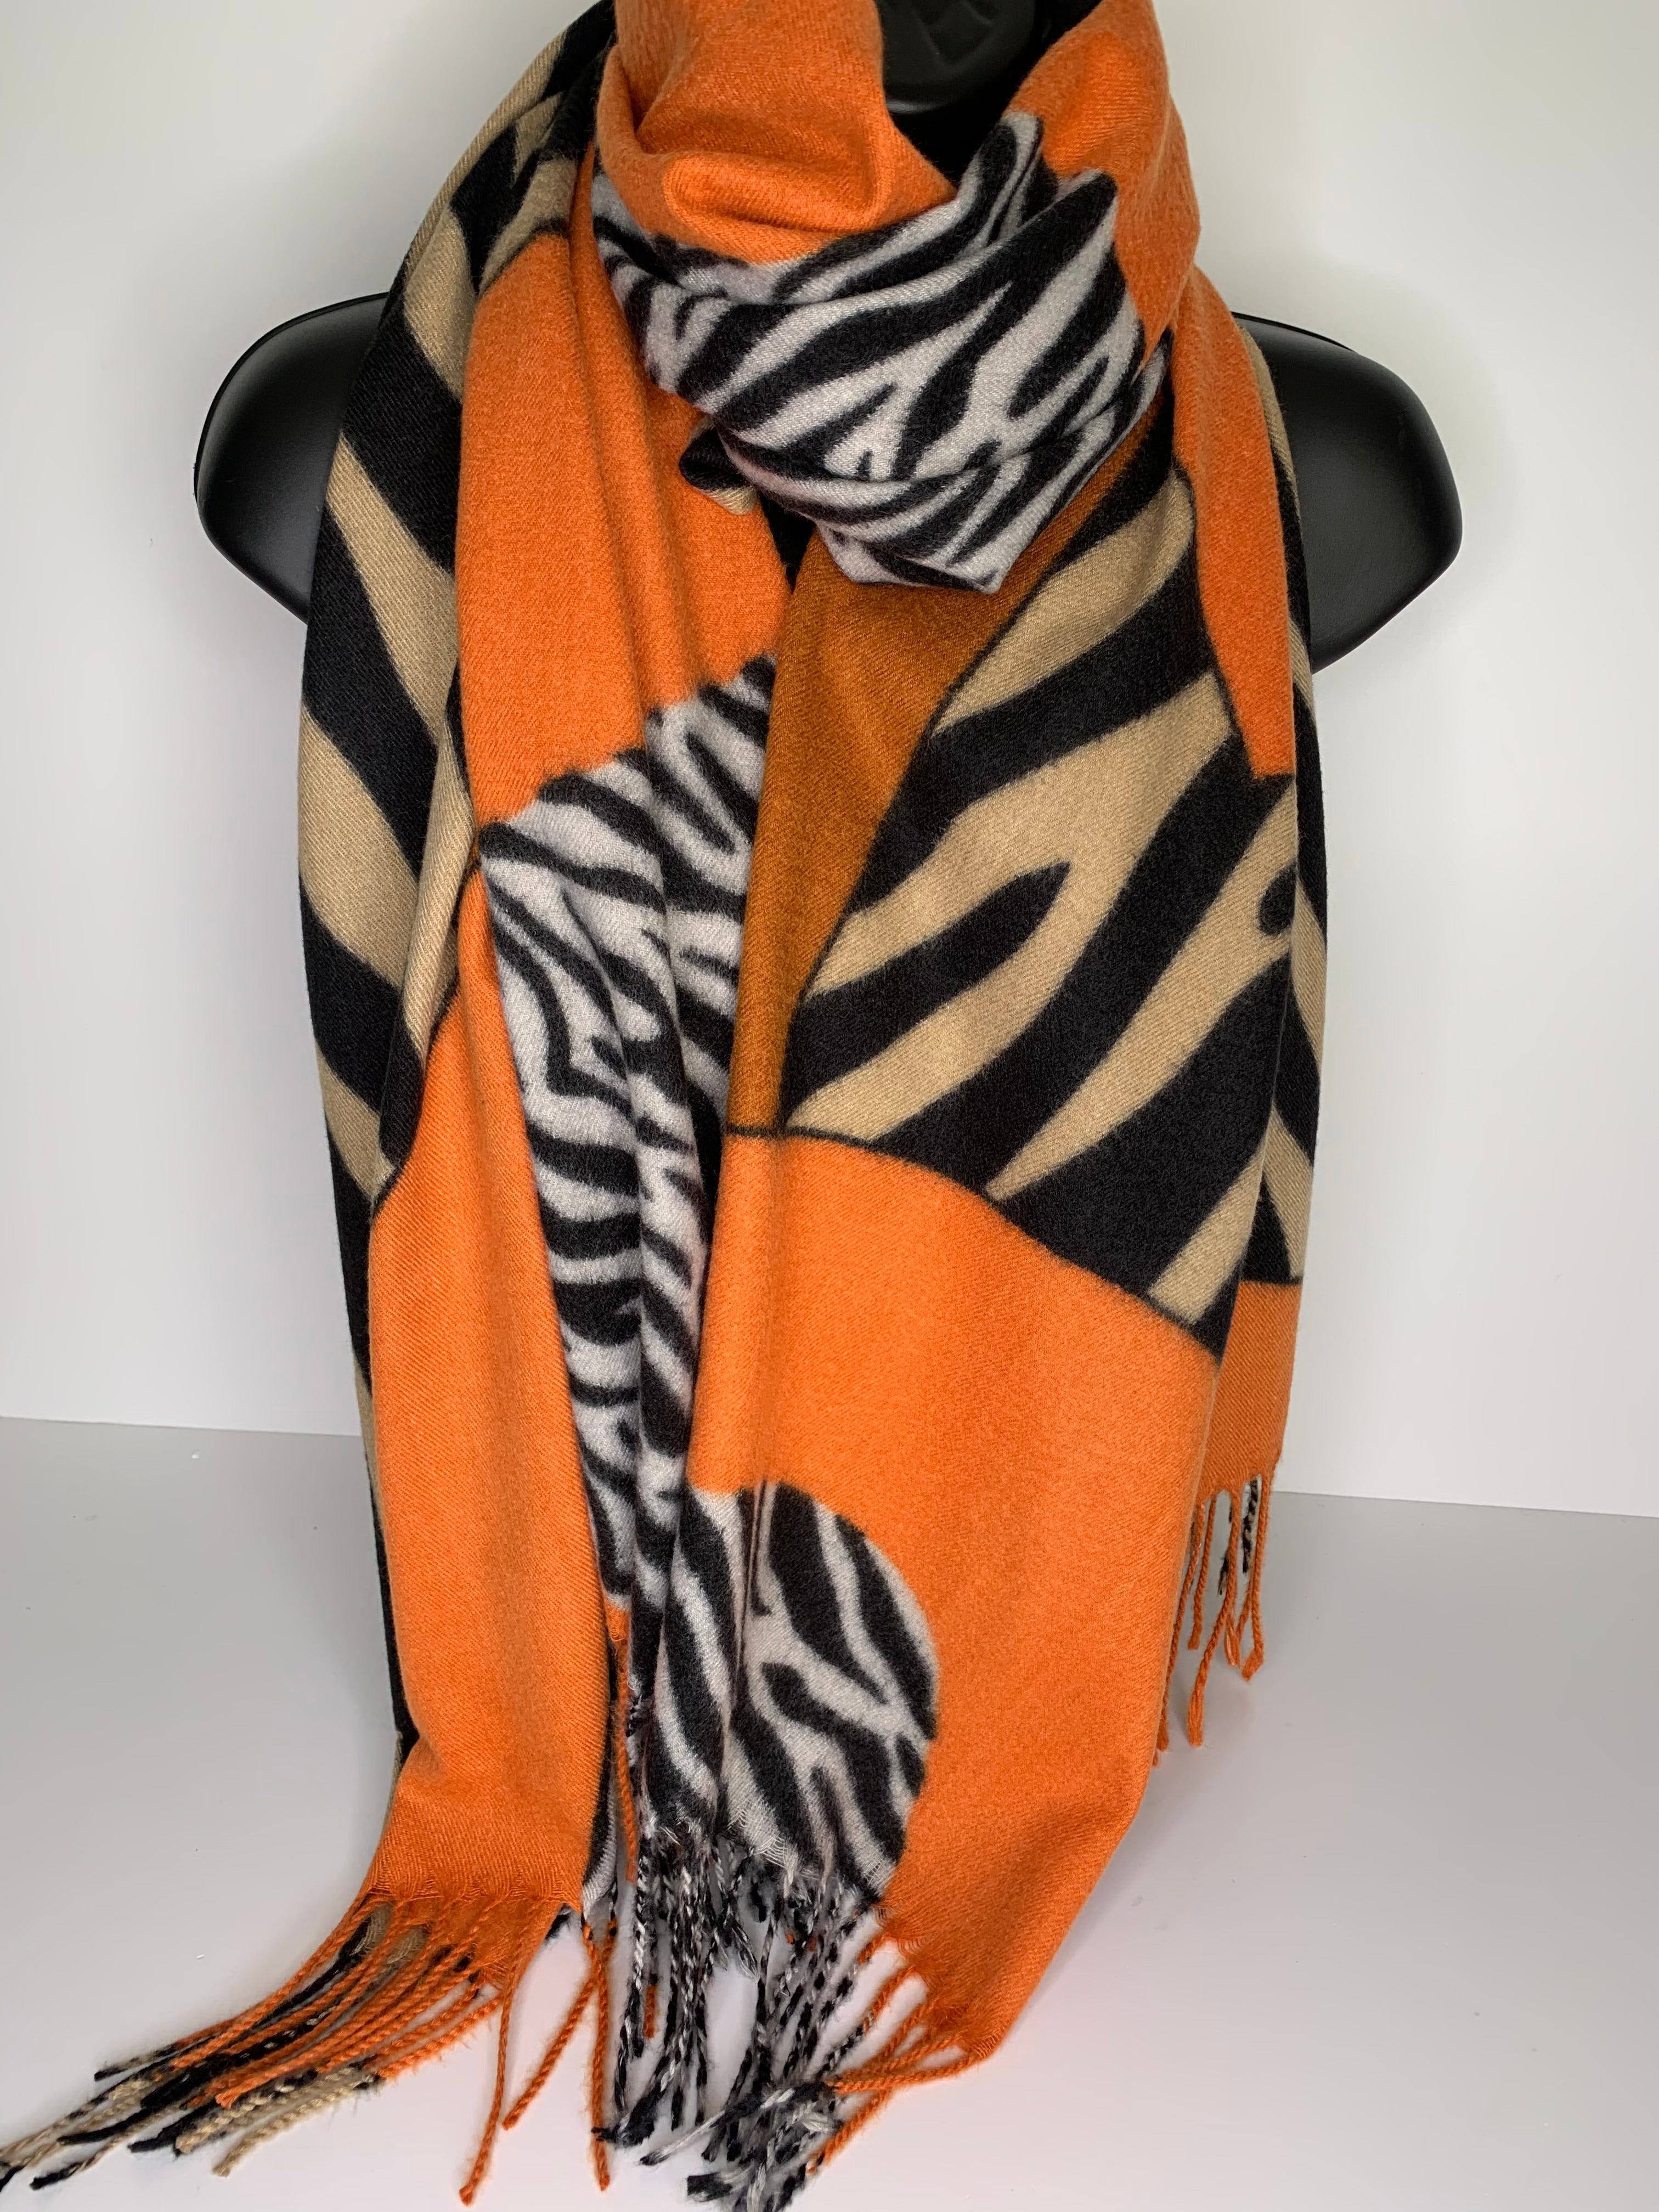 Winter weight, cashmere-mix zebra print scarf in shades of orange, tan, black, beige and cream